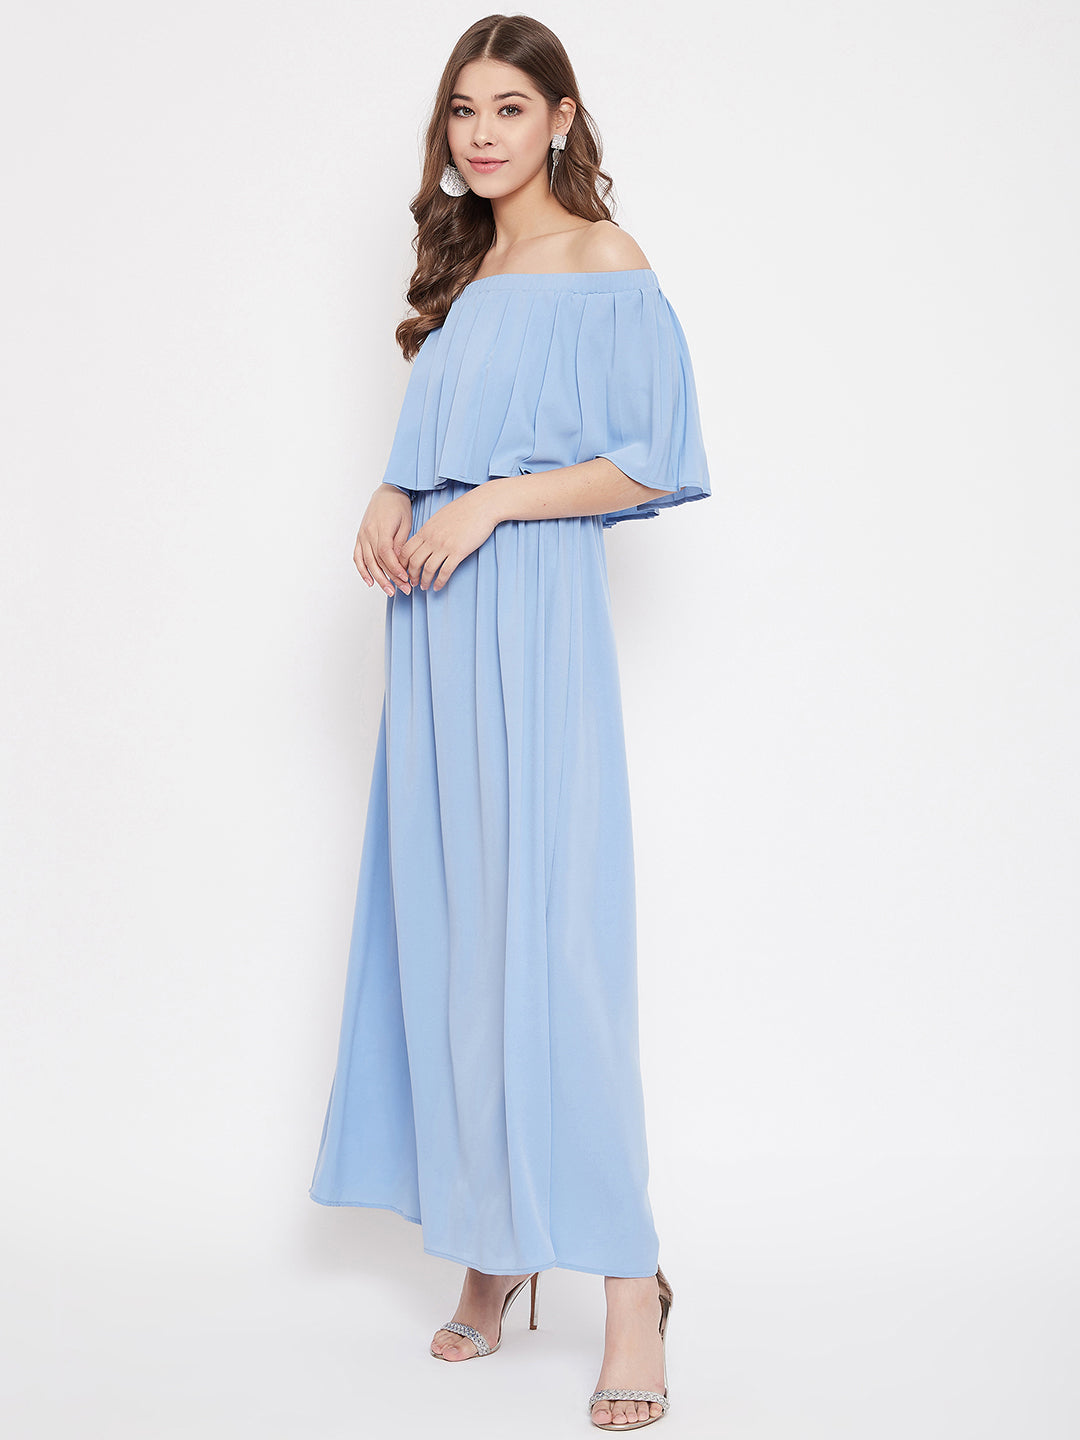 Buy Pratham Art Women's Cotton Silk Three-Quarter Sleeves Solid Dress (S,  Brown) at Amazon.in